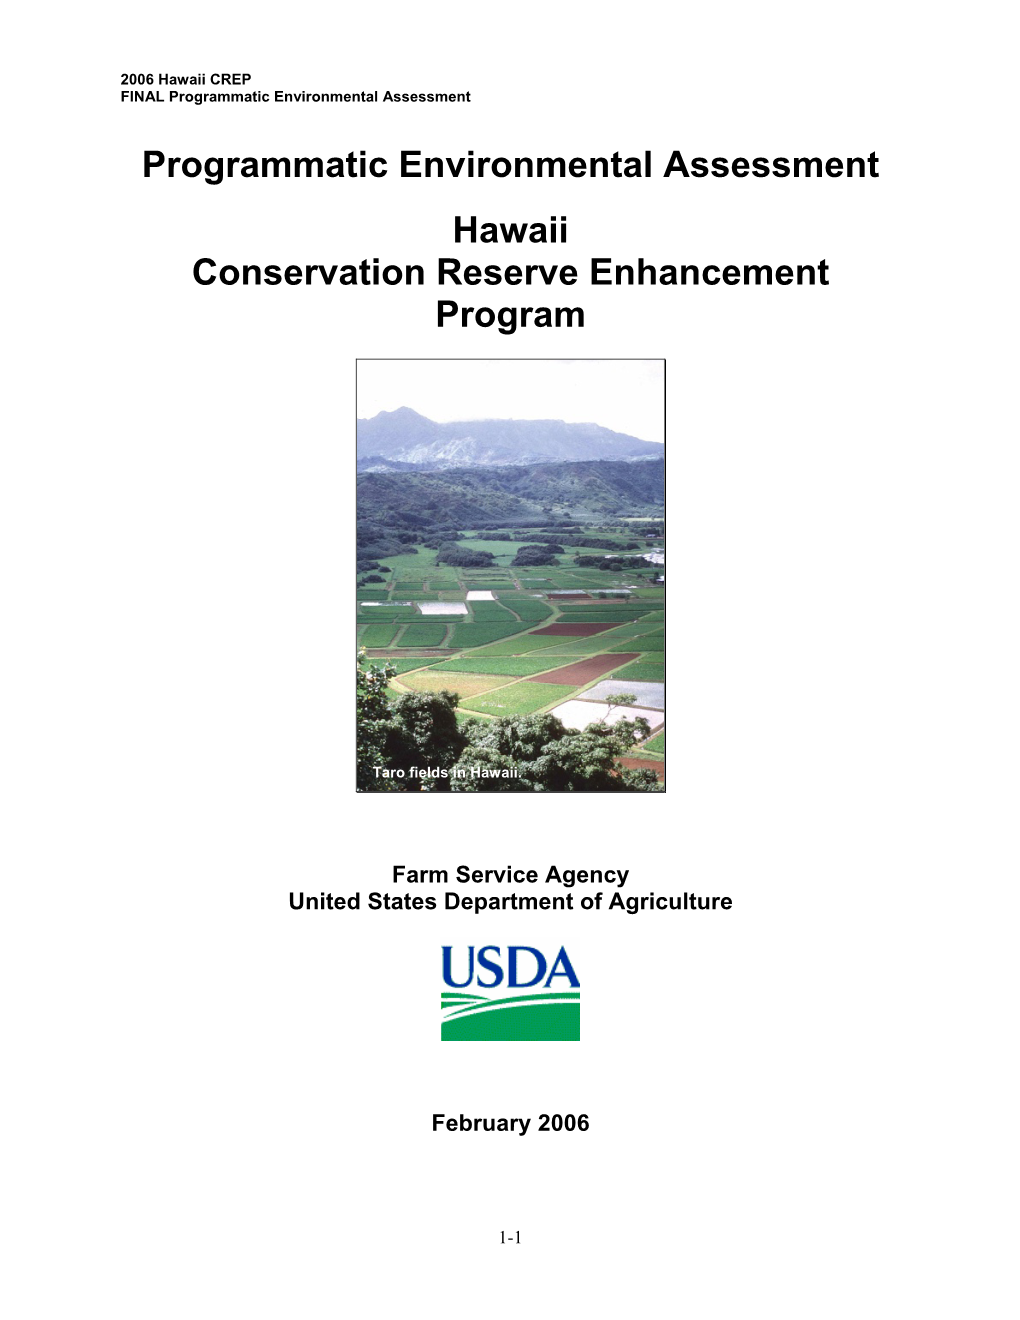 Hawaii CREP FINAL Programmatic Environmental Assessment